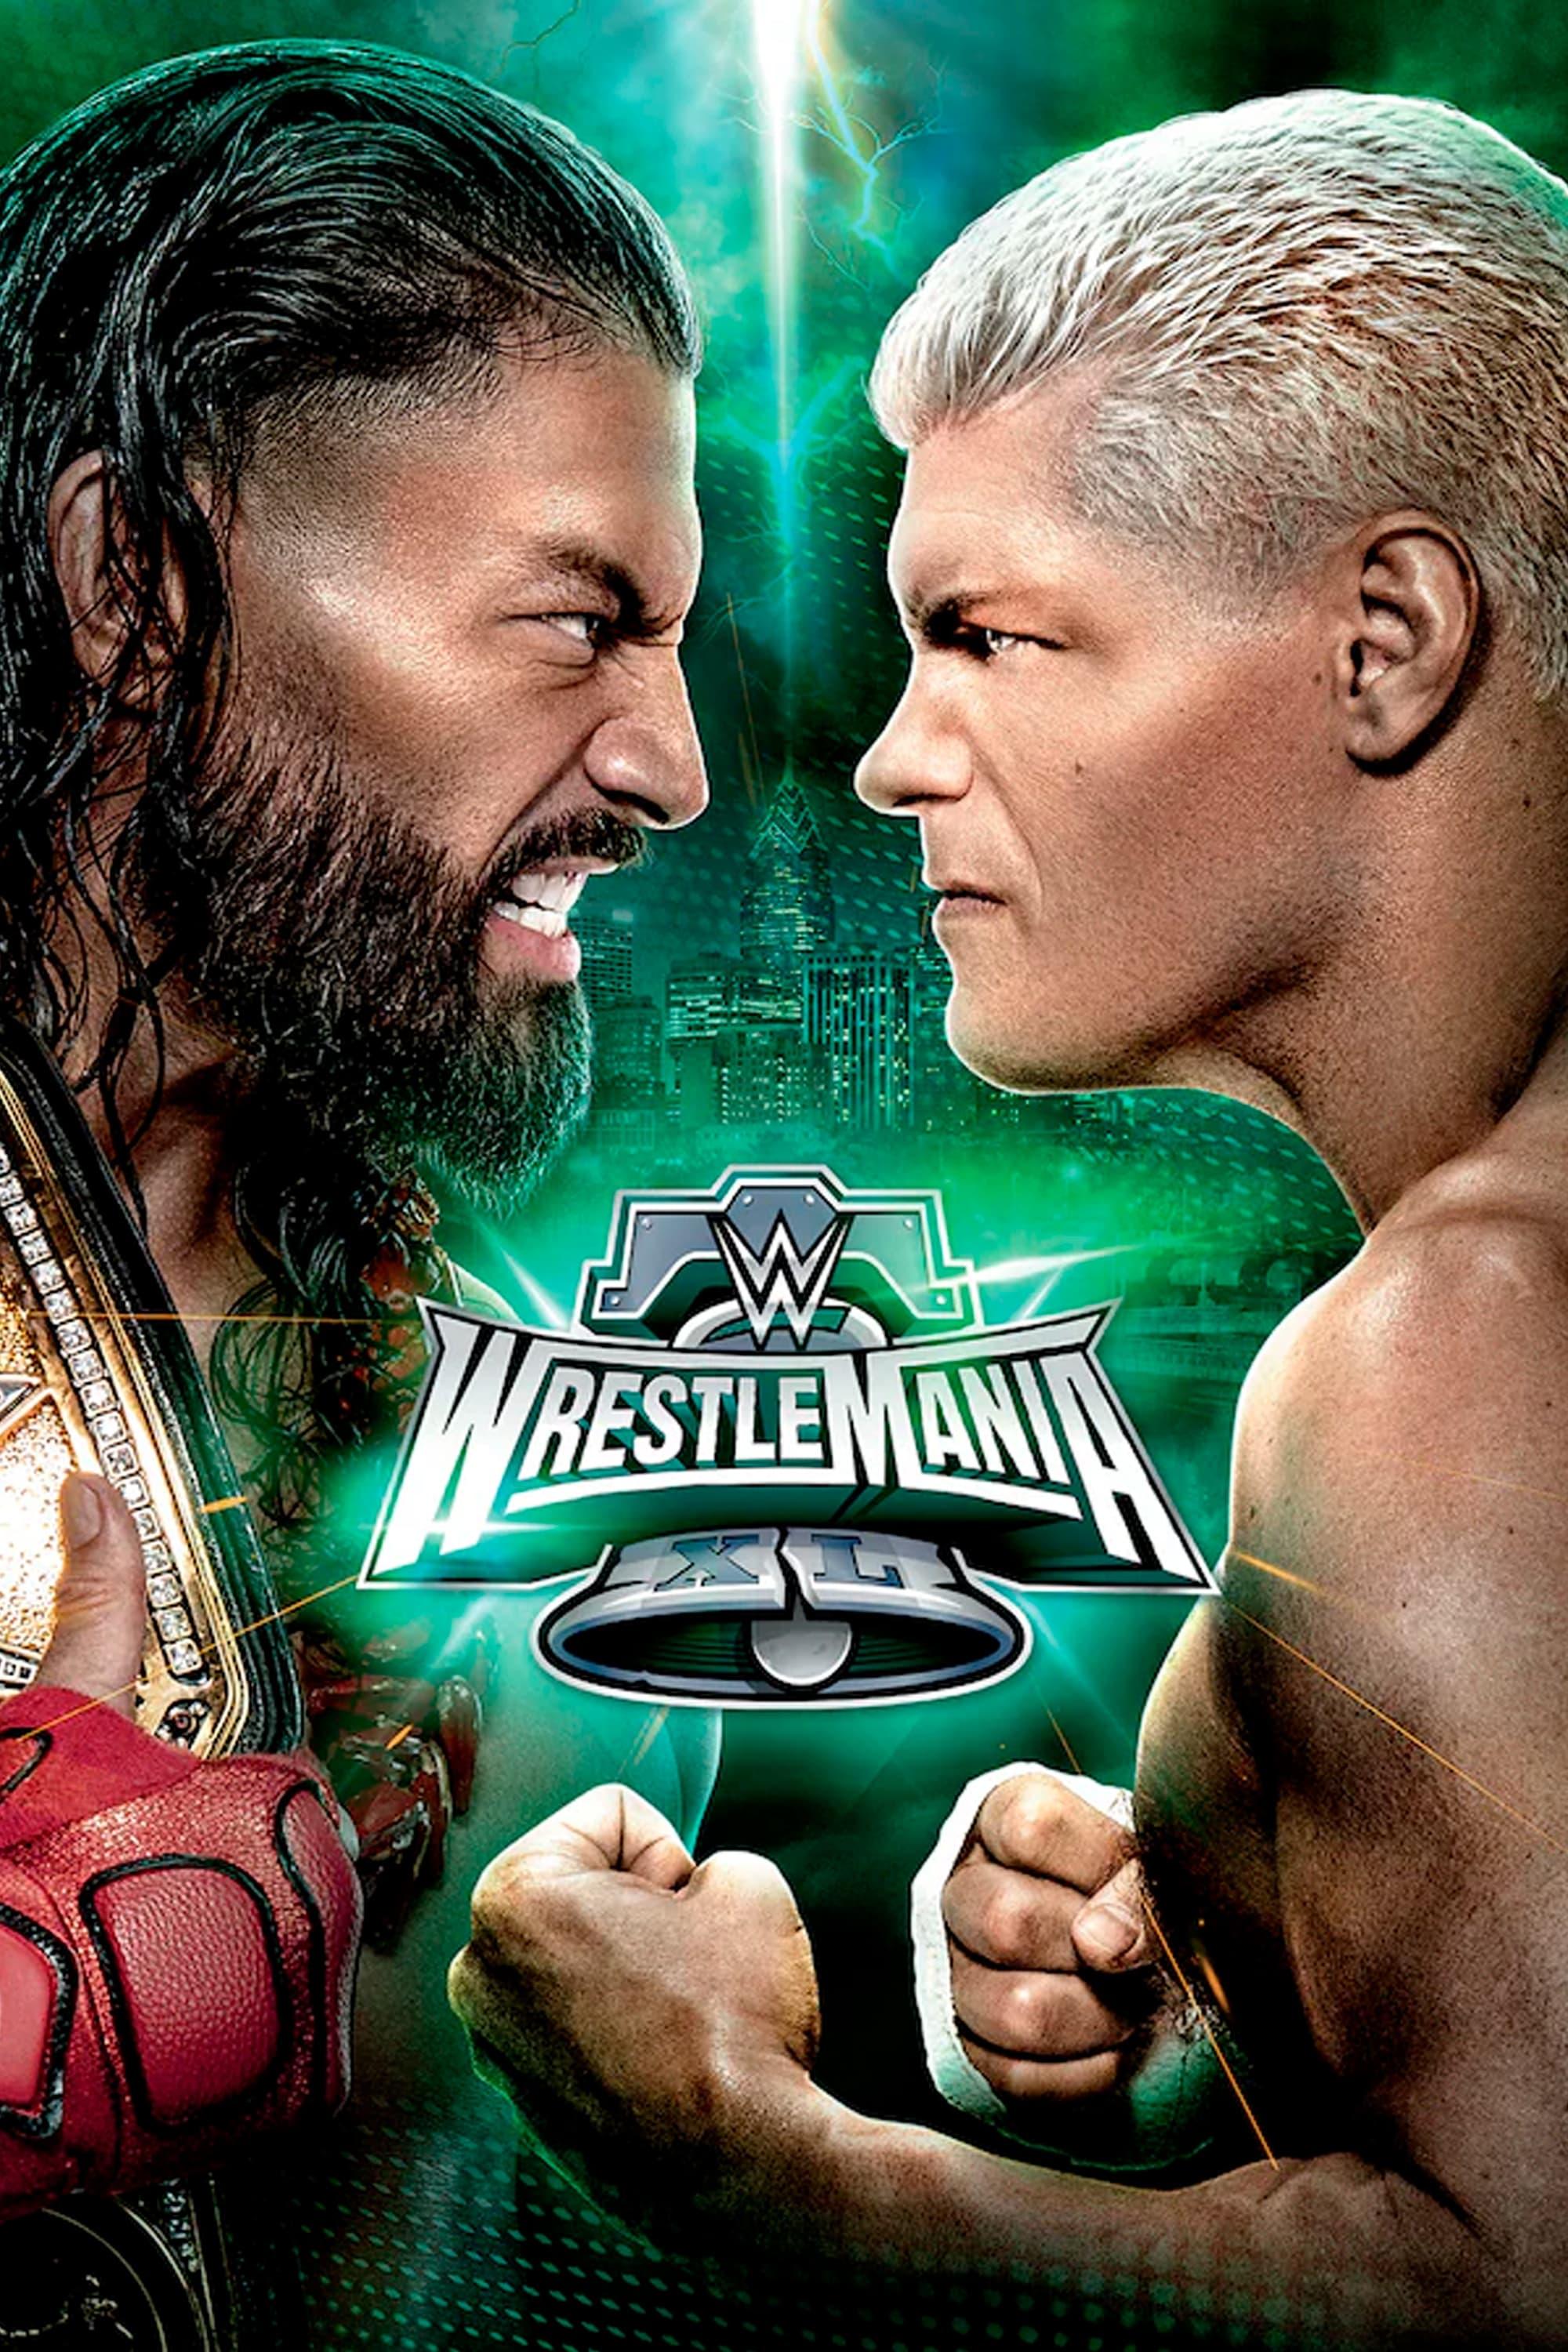 WWE WrestleMania XL Sunday poster